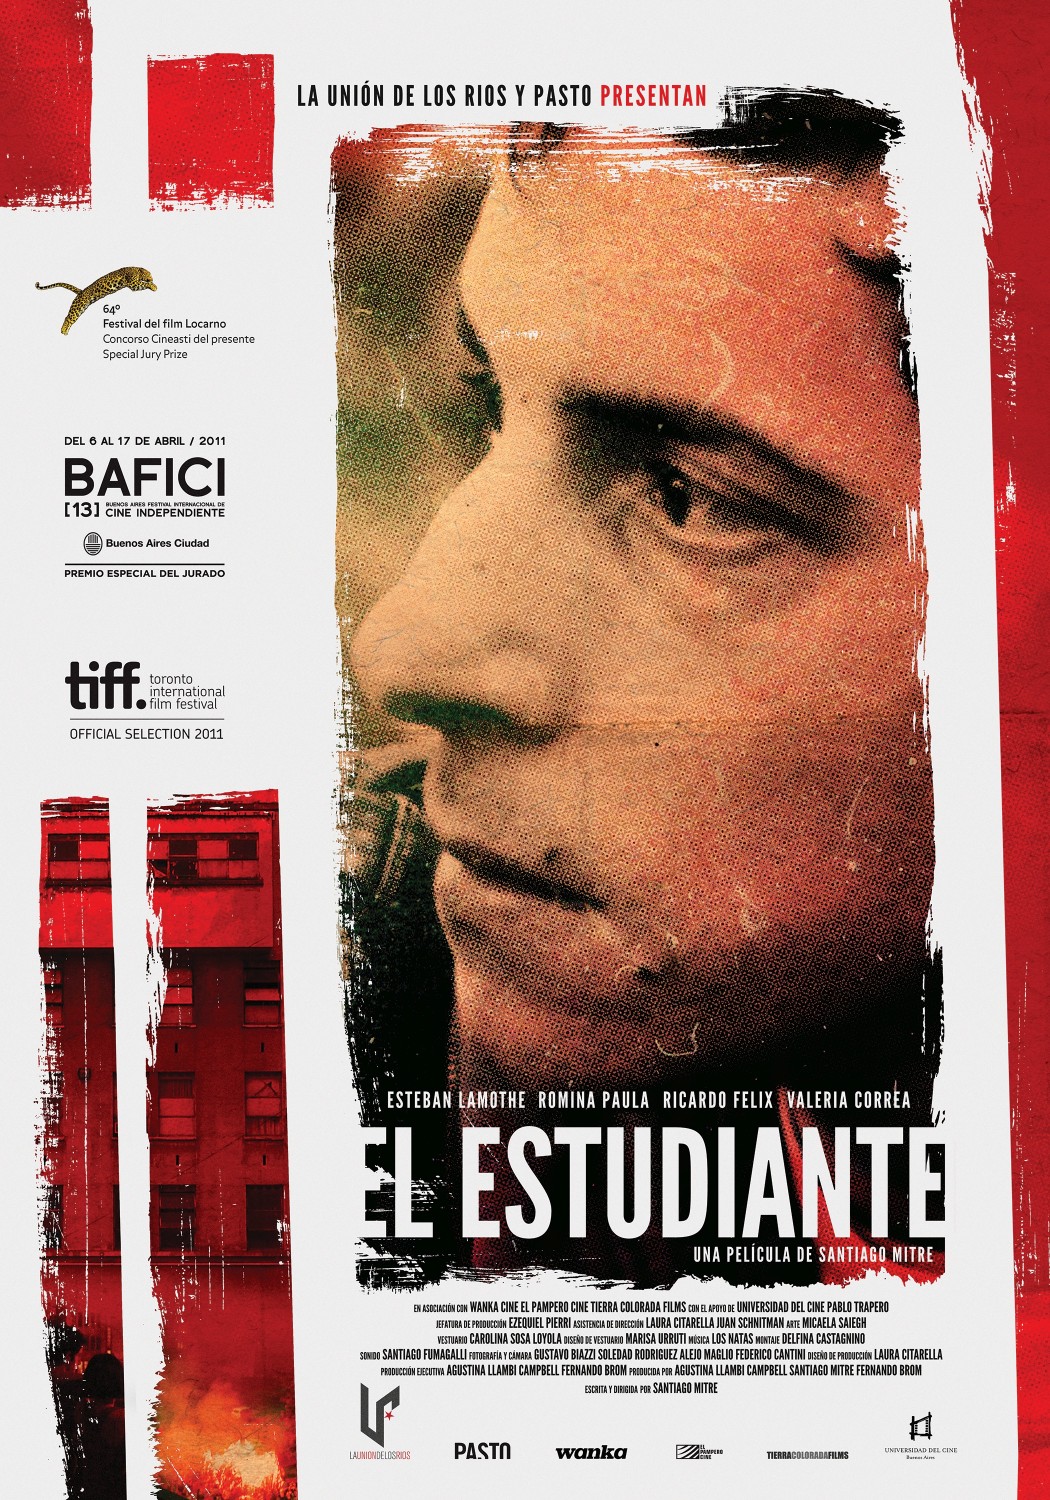 Extra Large Movie Poster Image for El estudiante 